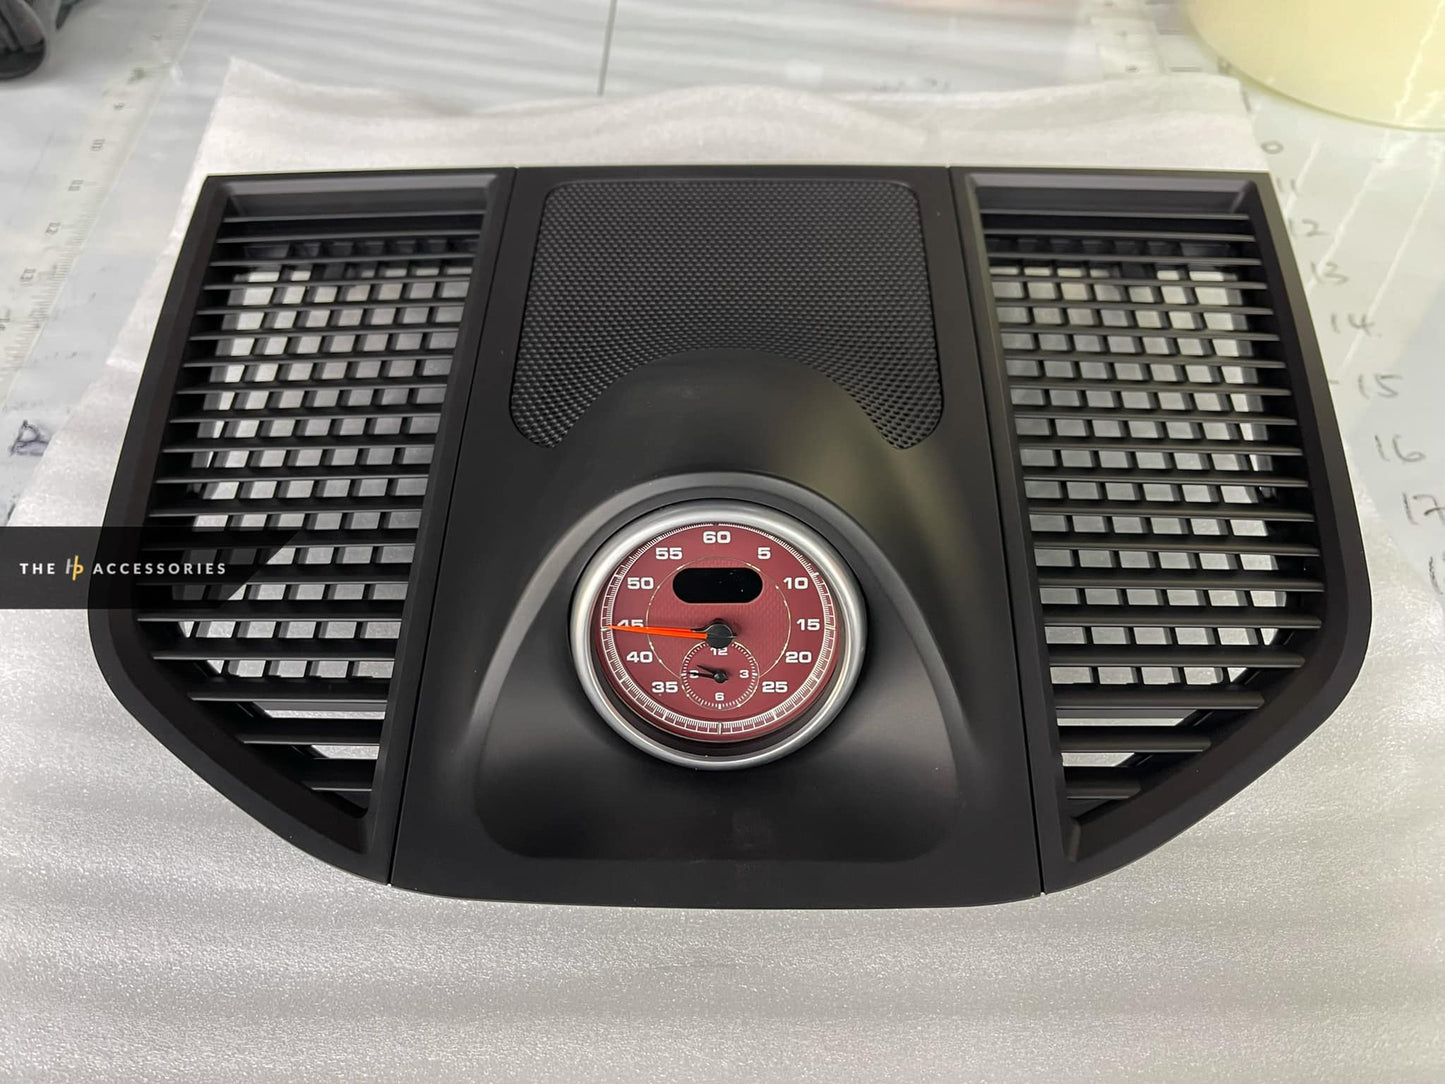 Porsche Dashboard Sport Chrono Analog Clock (OEM)